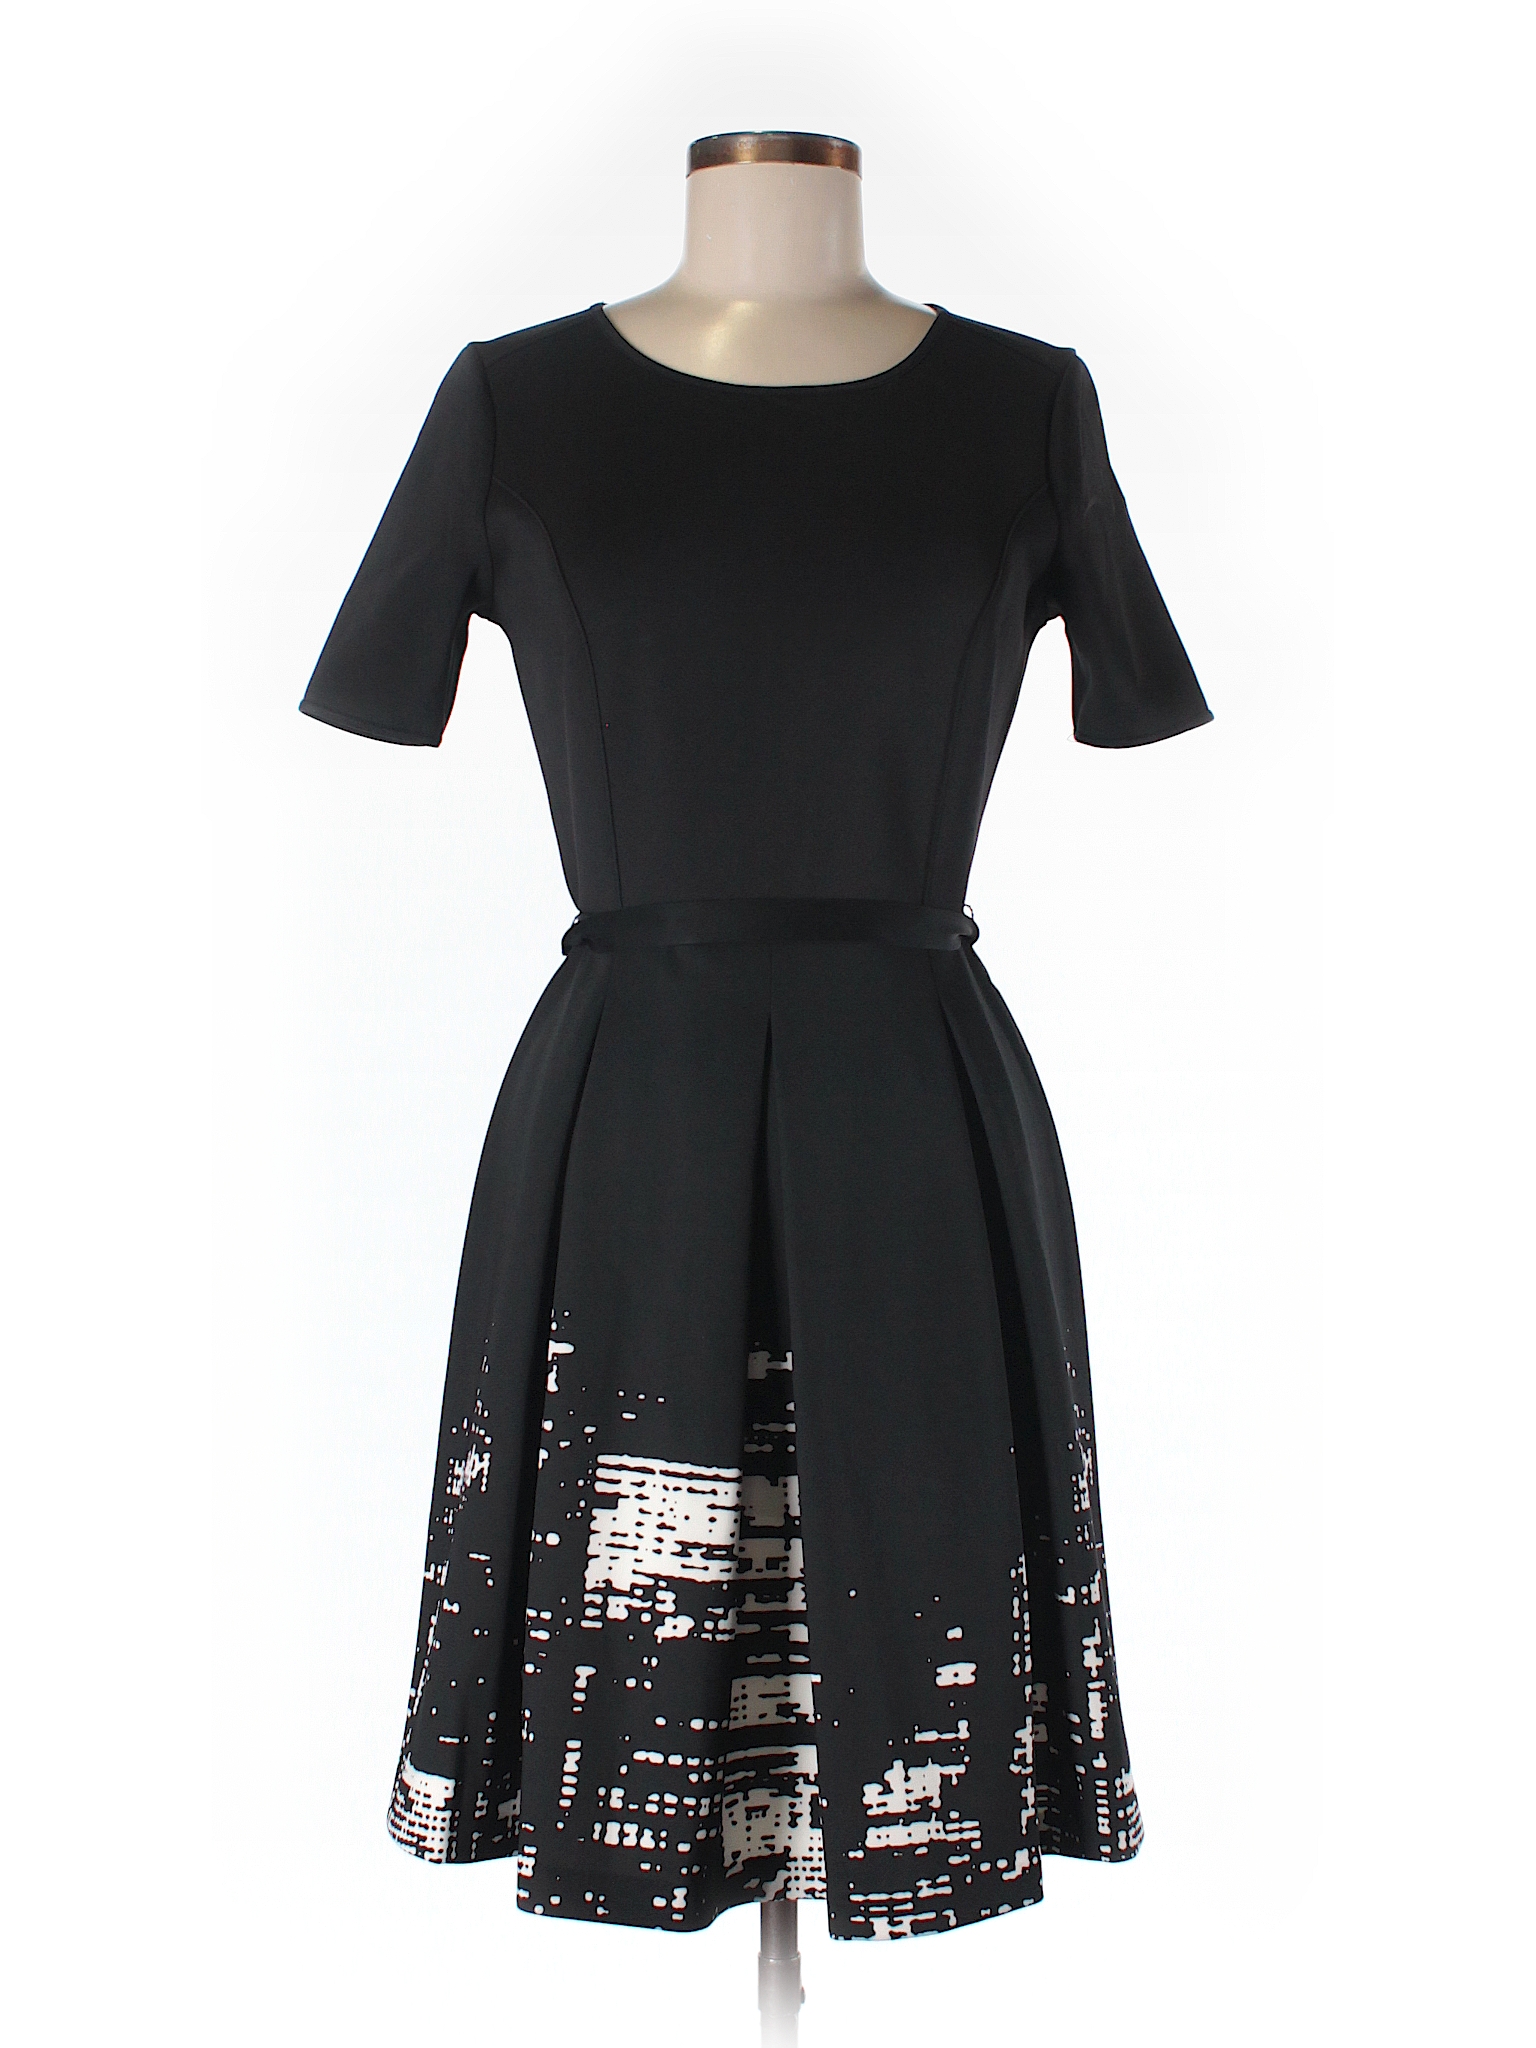 Elie Tahari Print Black Casual Dress Size 4 - 80% off | thredUP